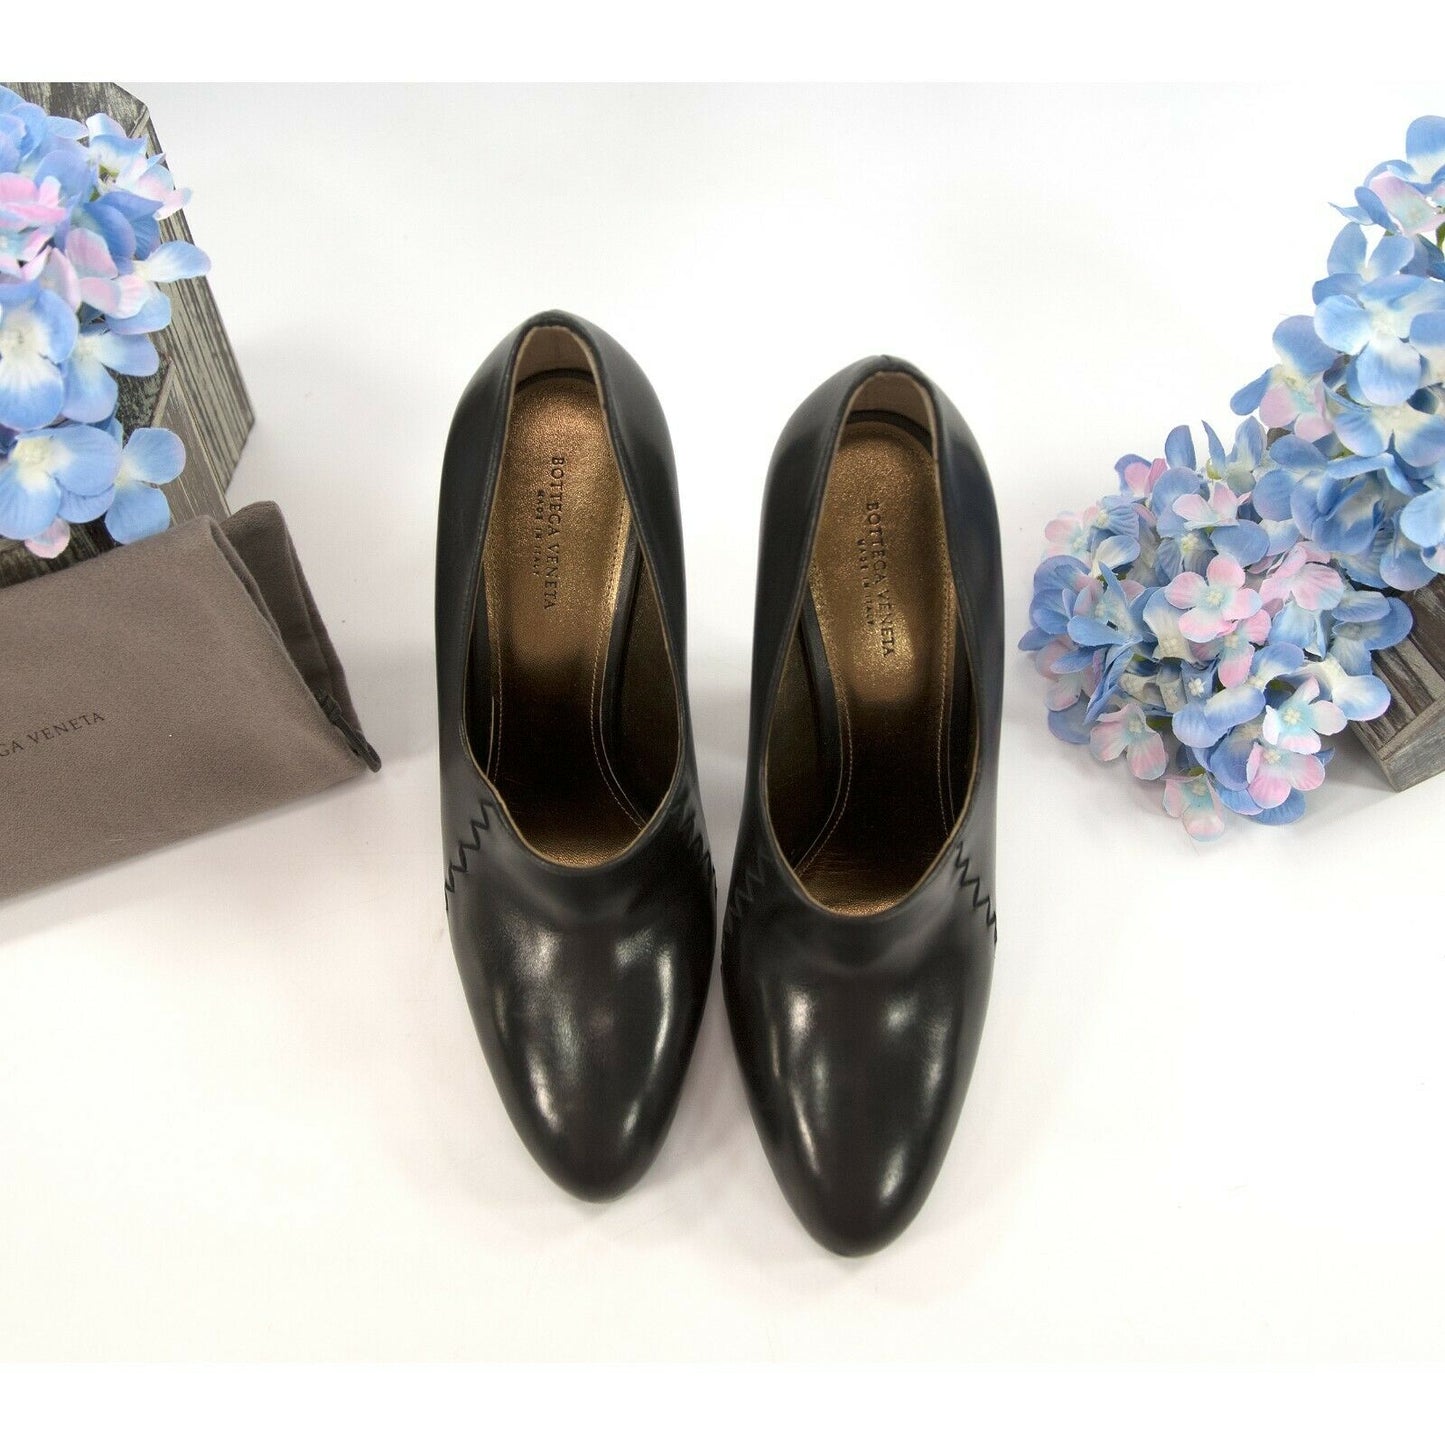 Bottega Veneta Black Leather Woven Bootie High Heels Size 39 NIB